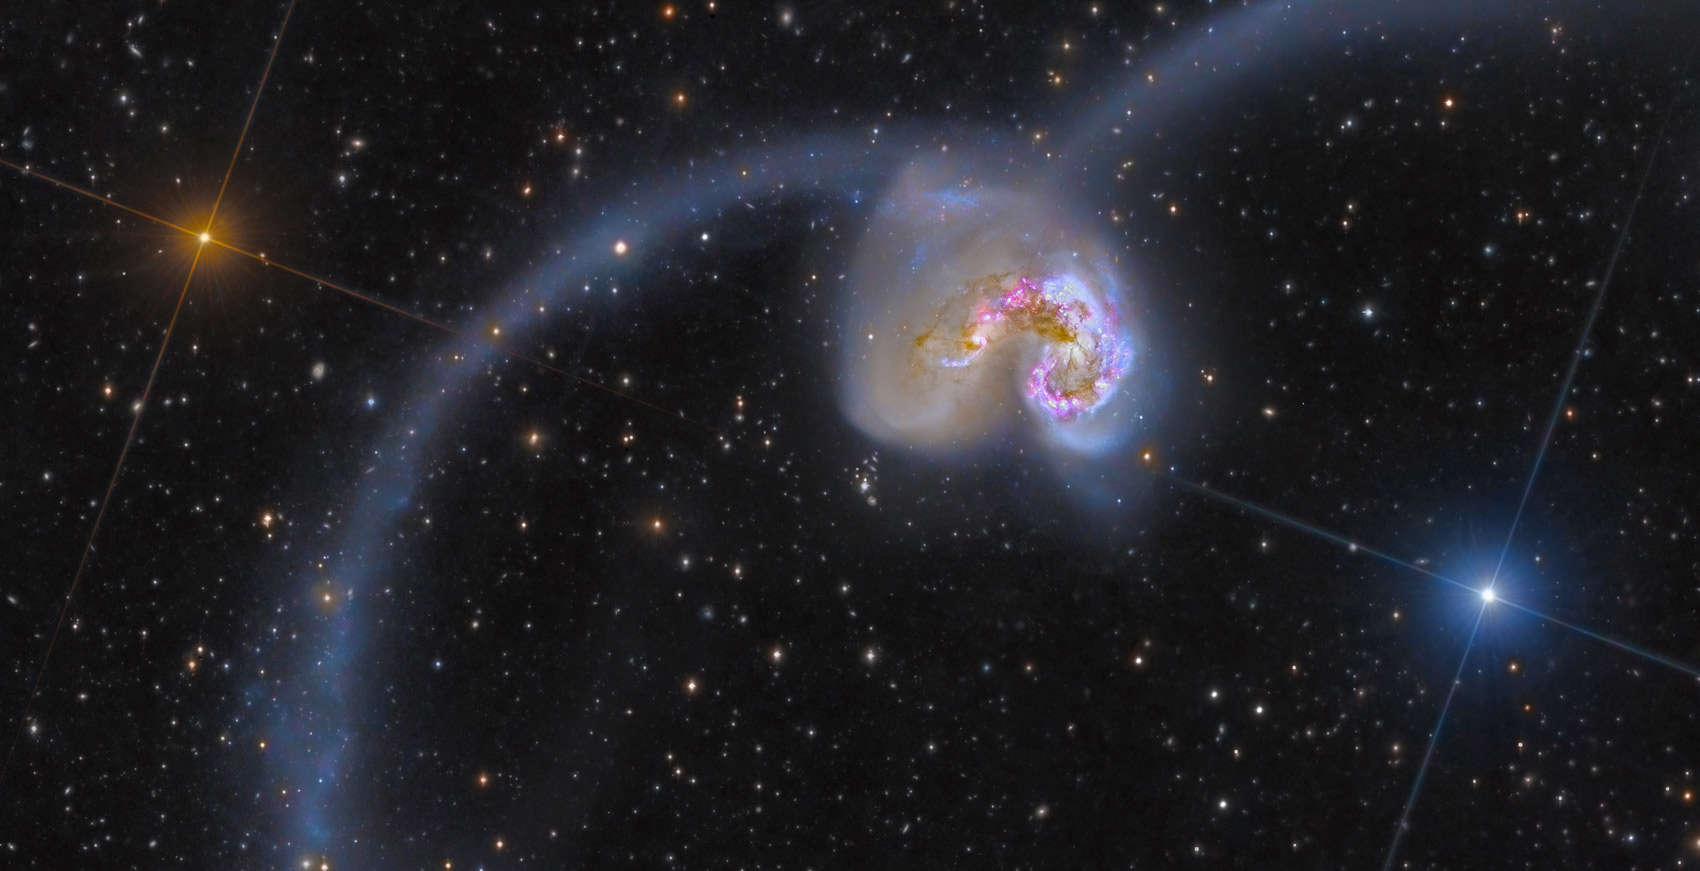 The Antennae Galaxies, a pair of colliding spiral galaxies 45 million light years away. Credit: NASA/ESA/ESO/NAOJ, Rolf Olsen and Federico Pelliccia